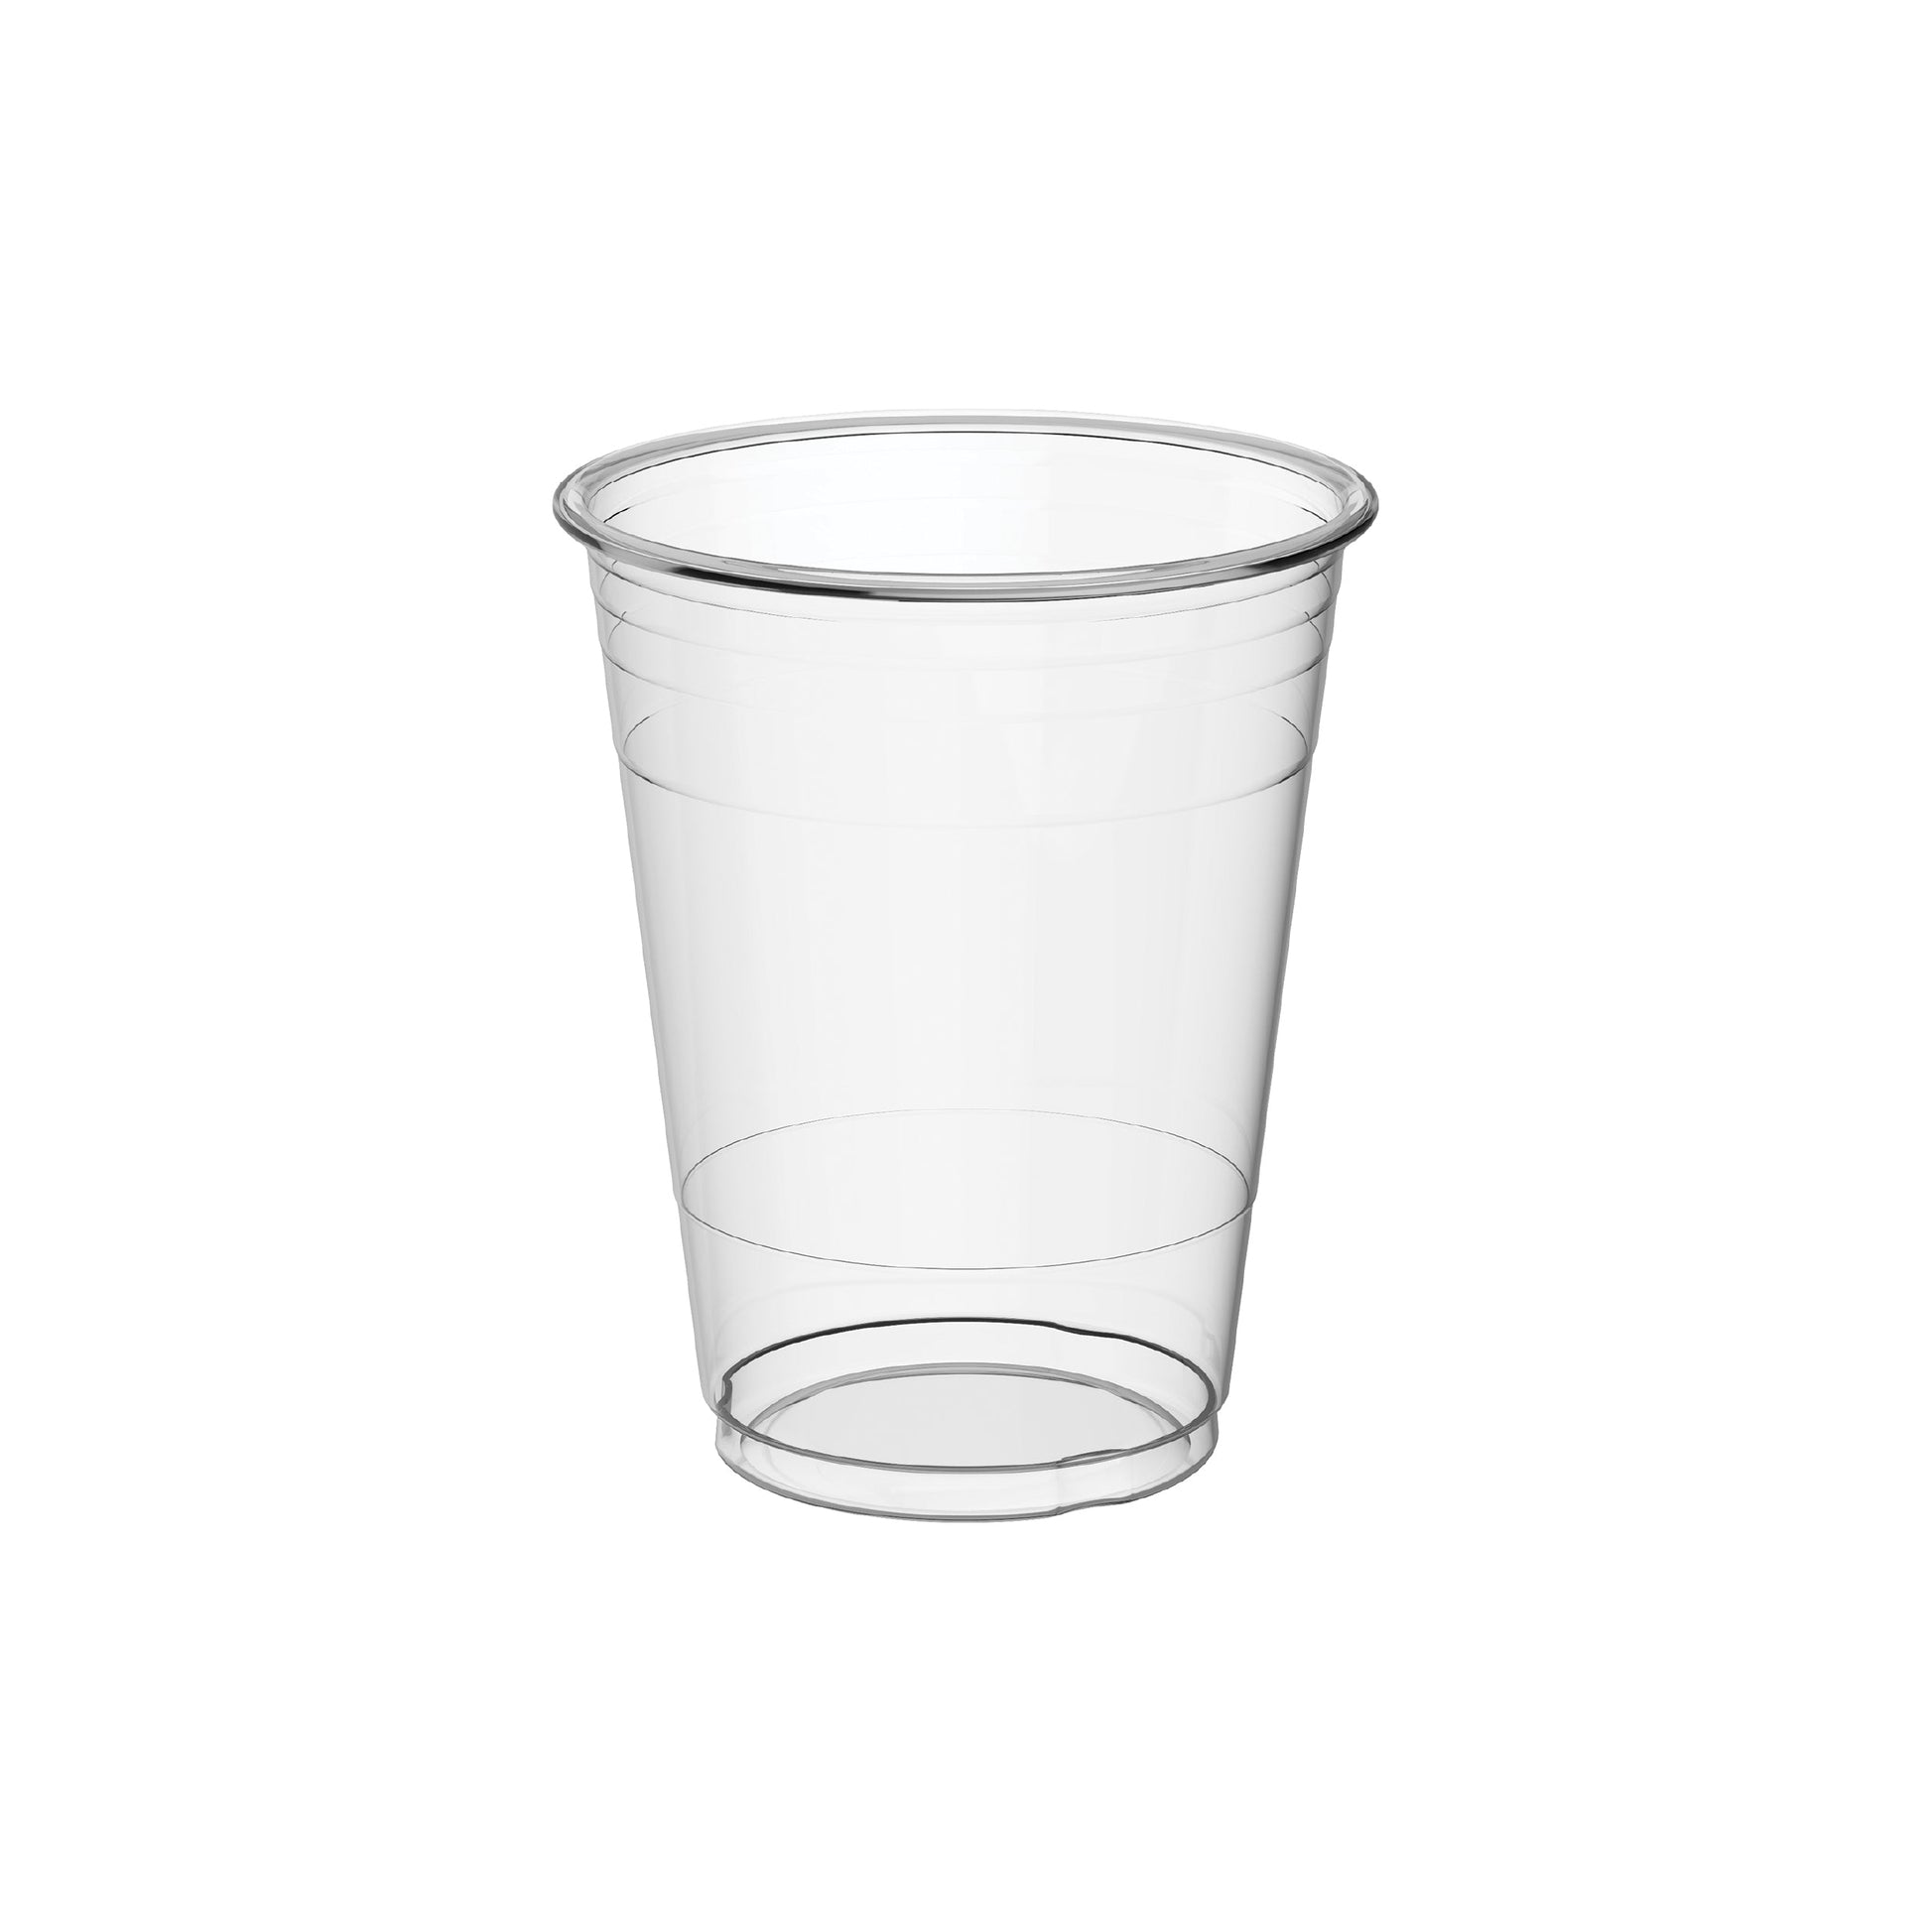 Wholesale Clear Plastic Cups 16oz - Cosmoplast Oman